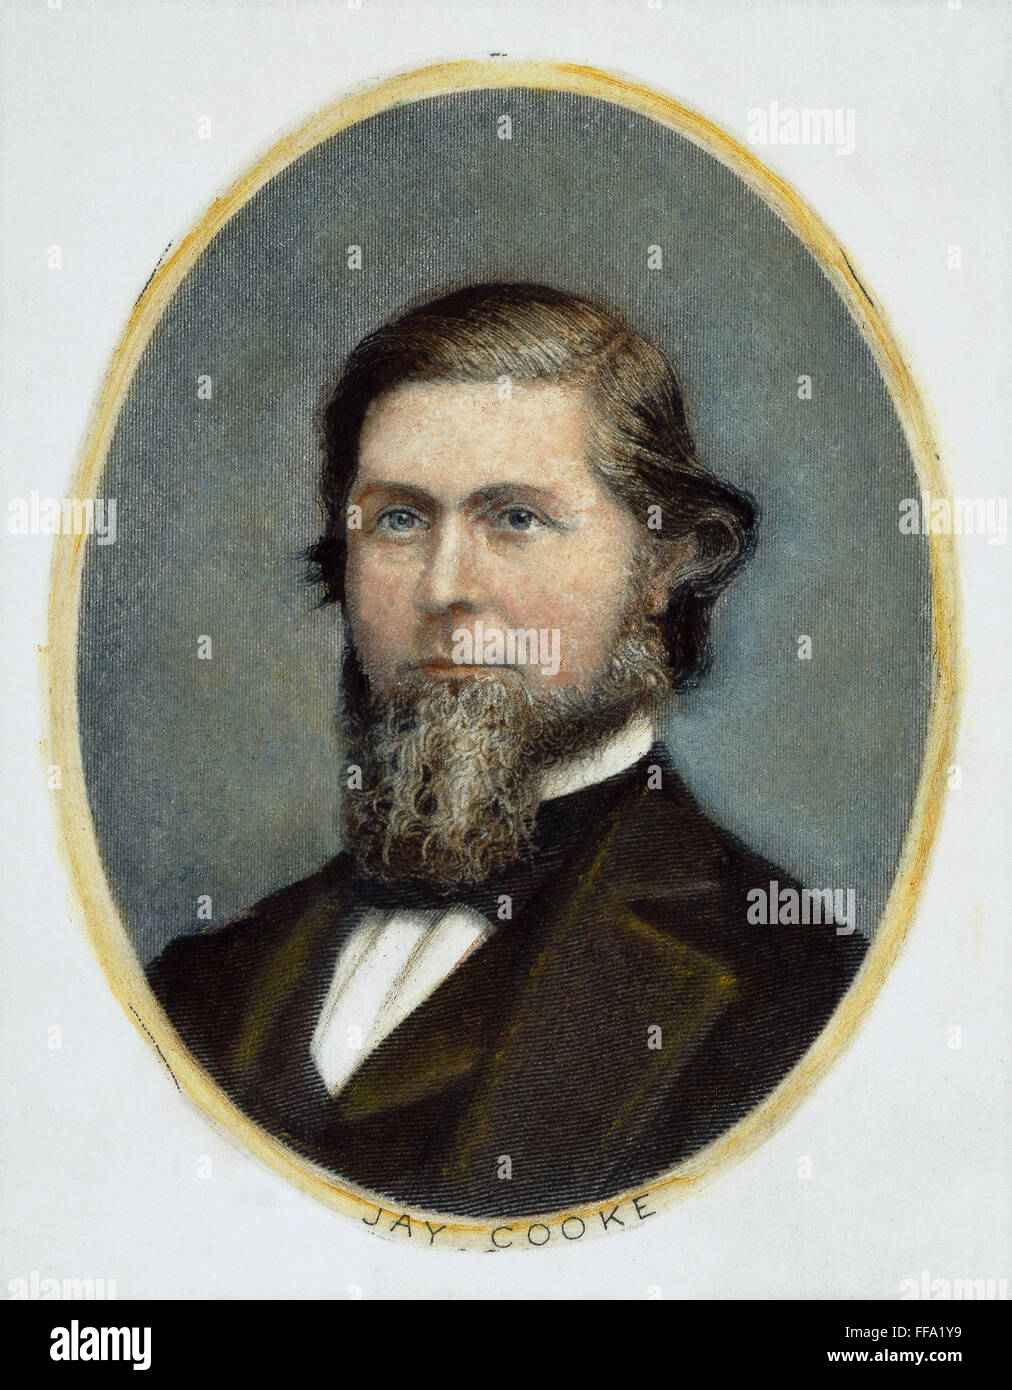 JAY COOKE (1821-1905). /nAmerican banker: American steel engraving, 19th century. Stock Photo